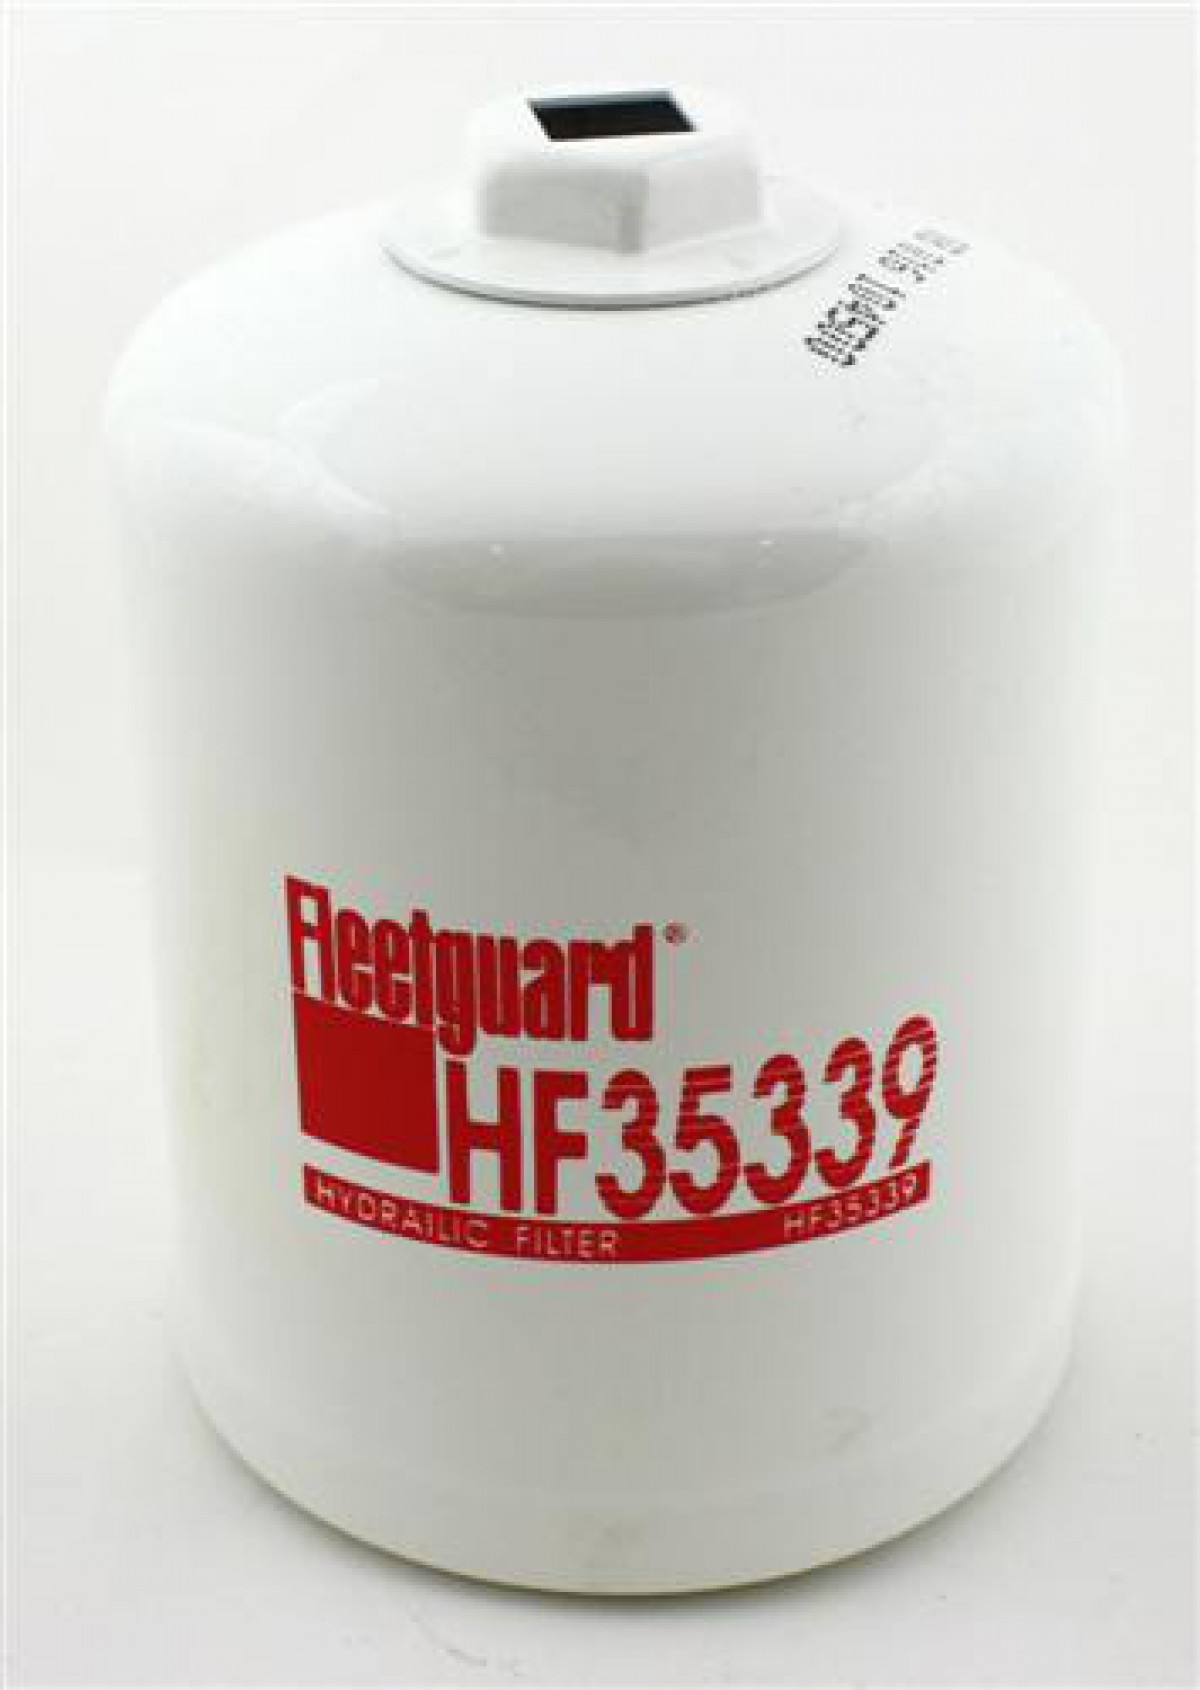 Filtr hydrauliczny  HF 35339 